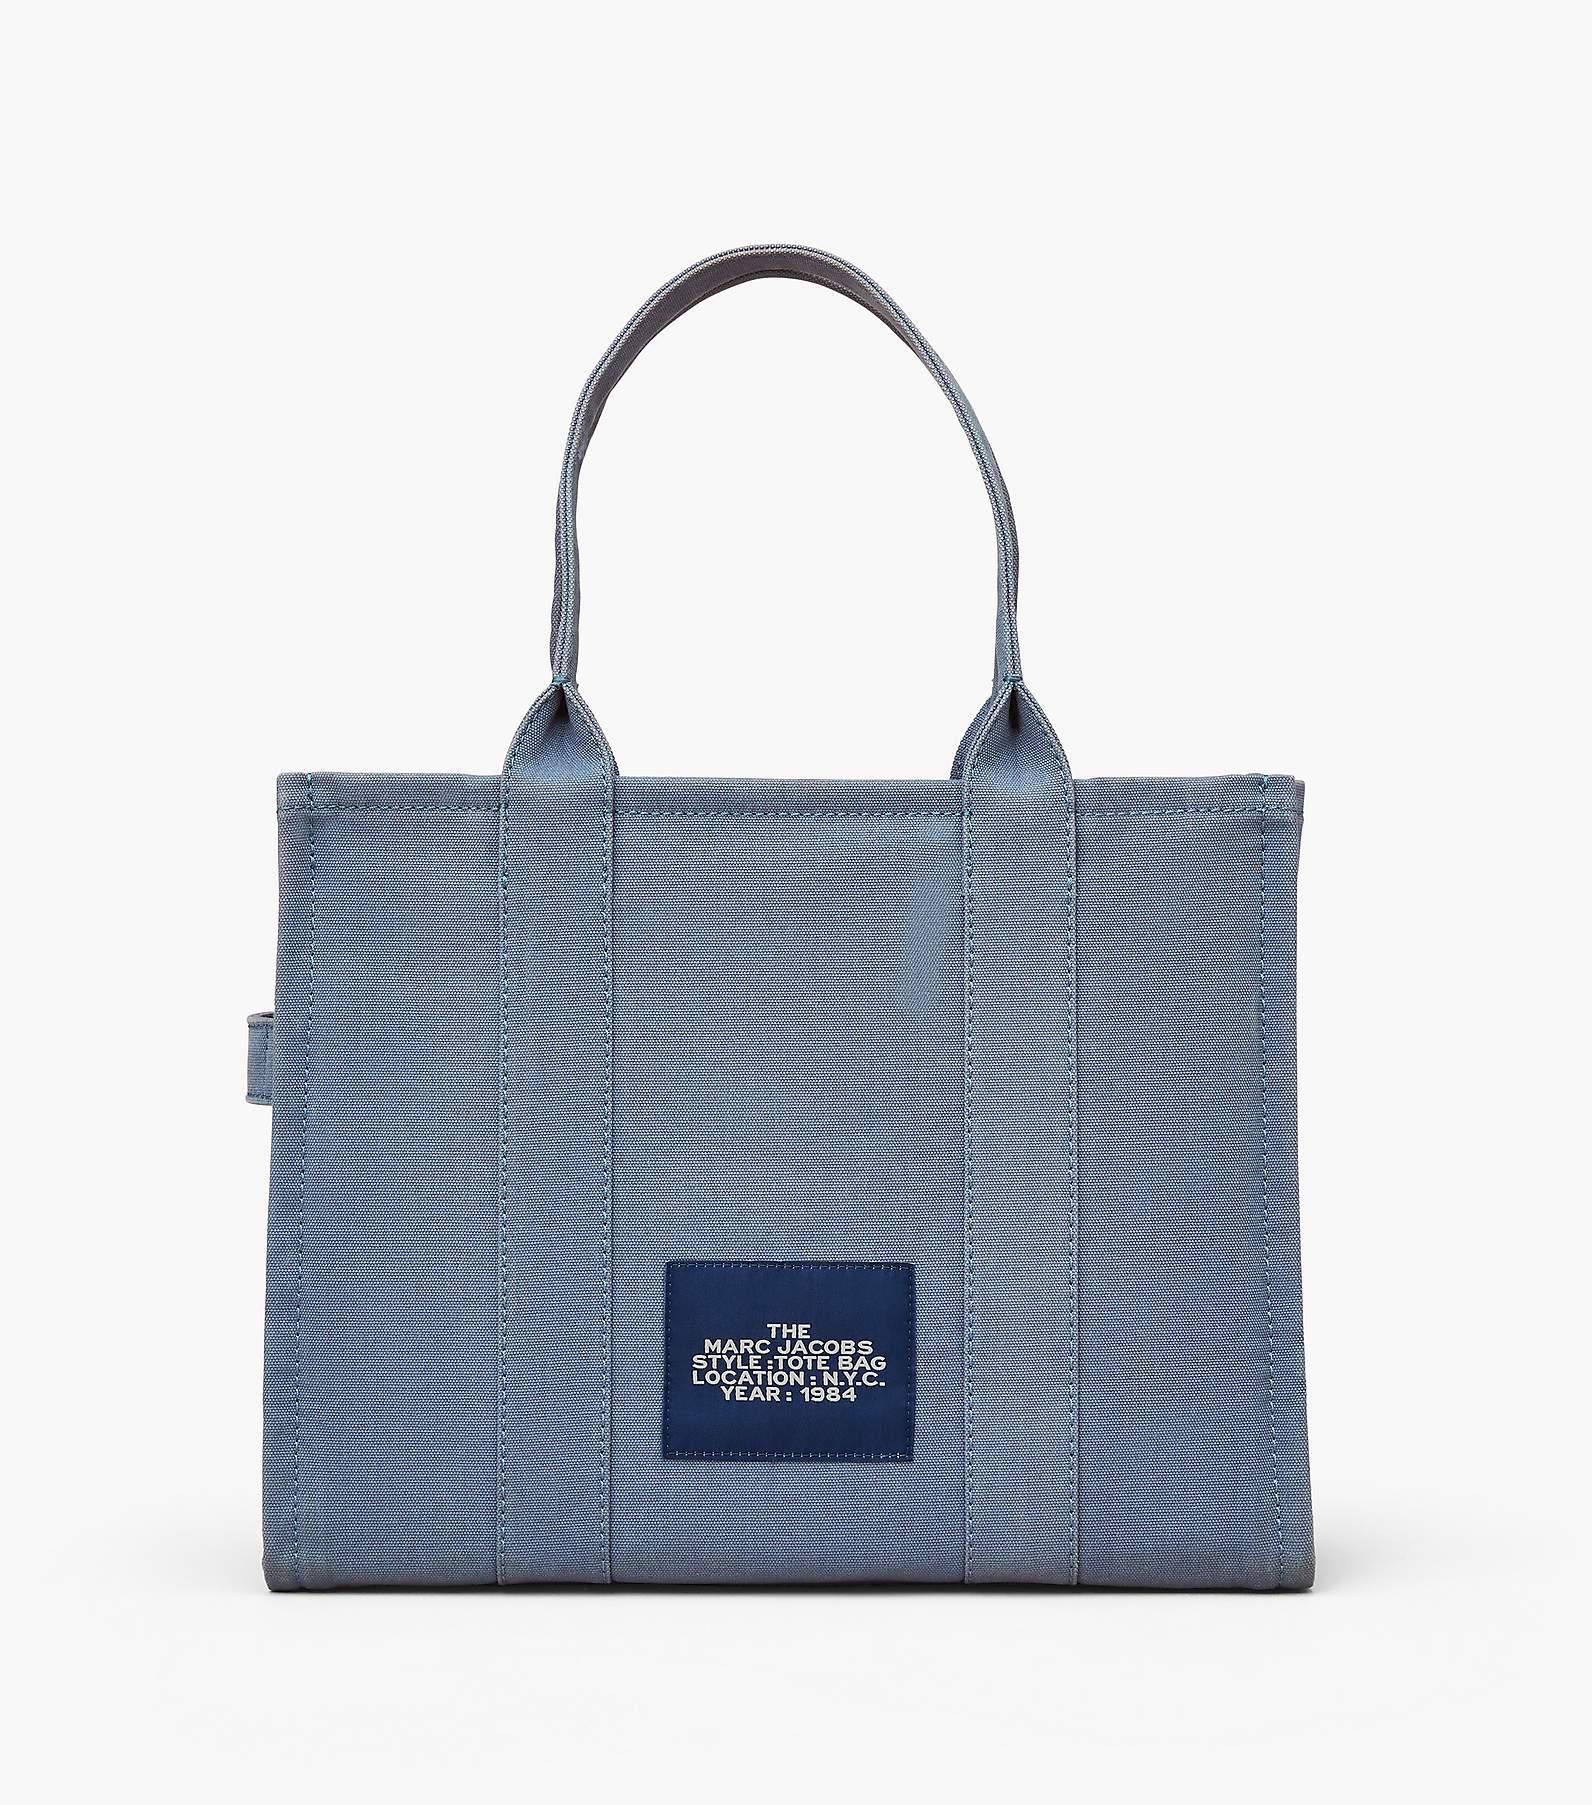 Purse Organizer for Carmel Bag Customizable Bag Insert Purse 